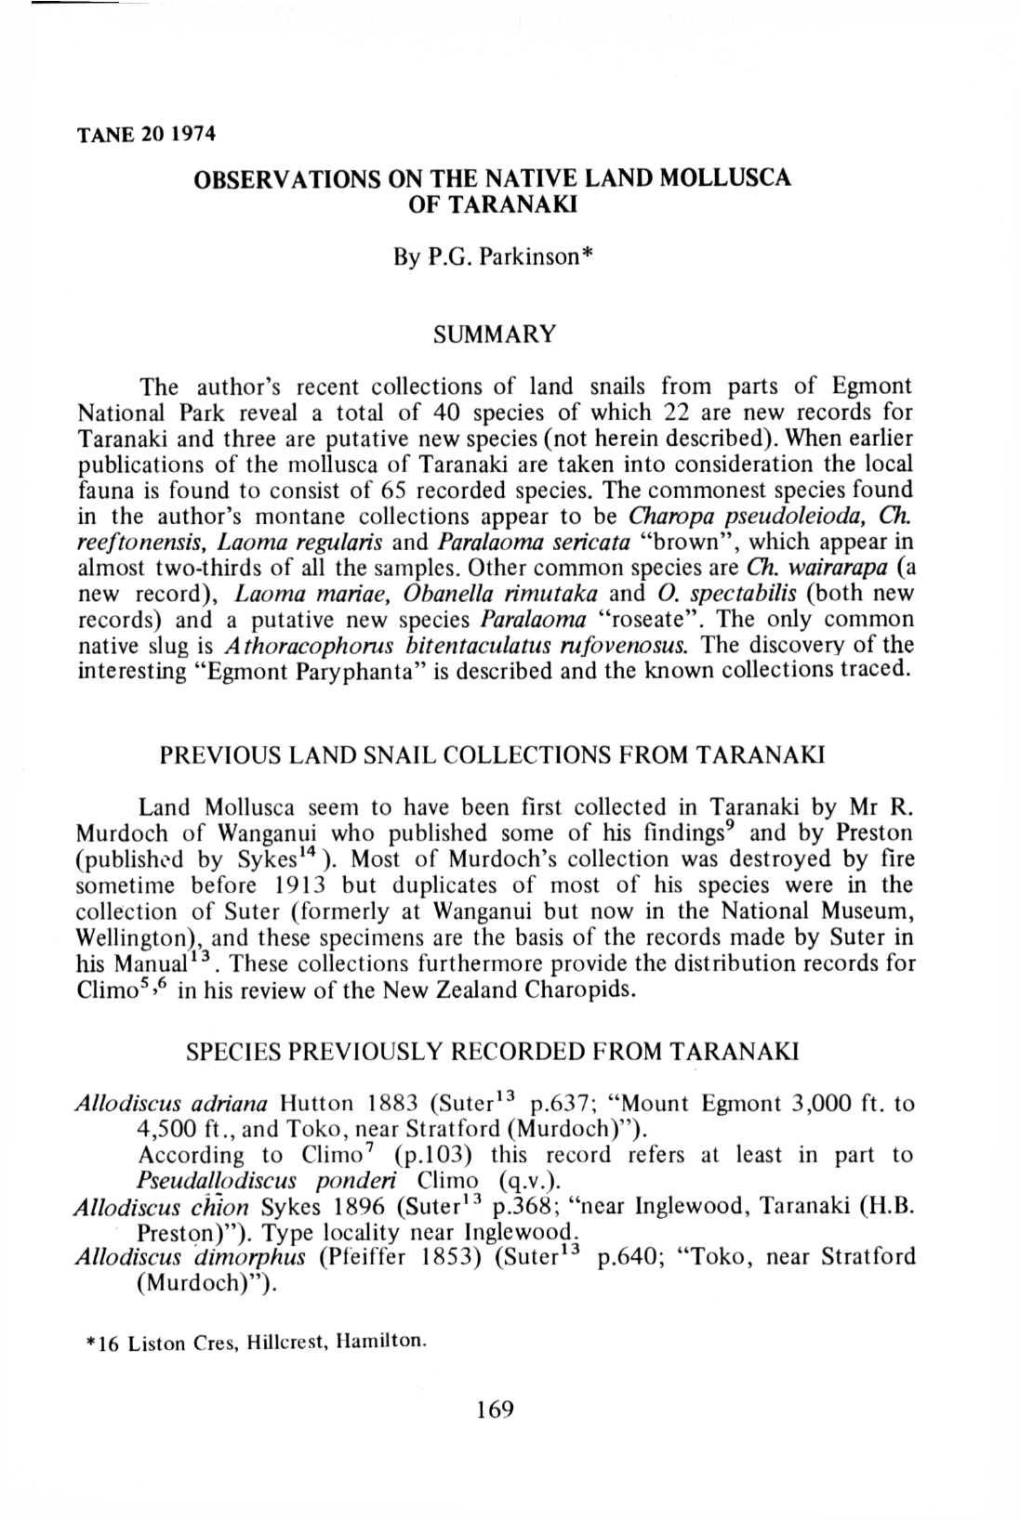 Observations on the Native Land Mollusca of Taranaki